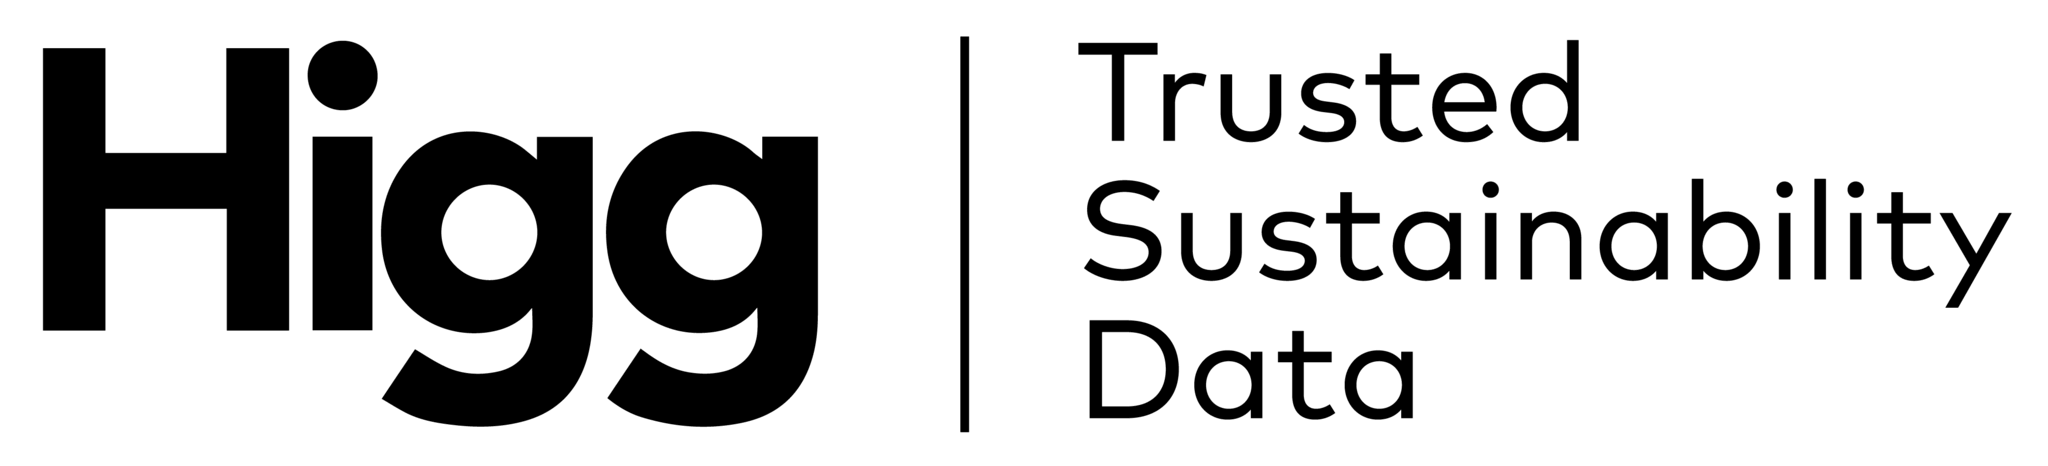 HIgg logo